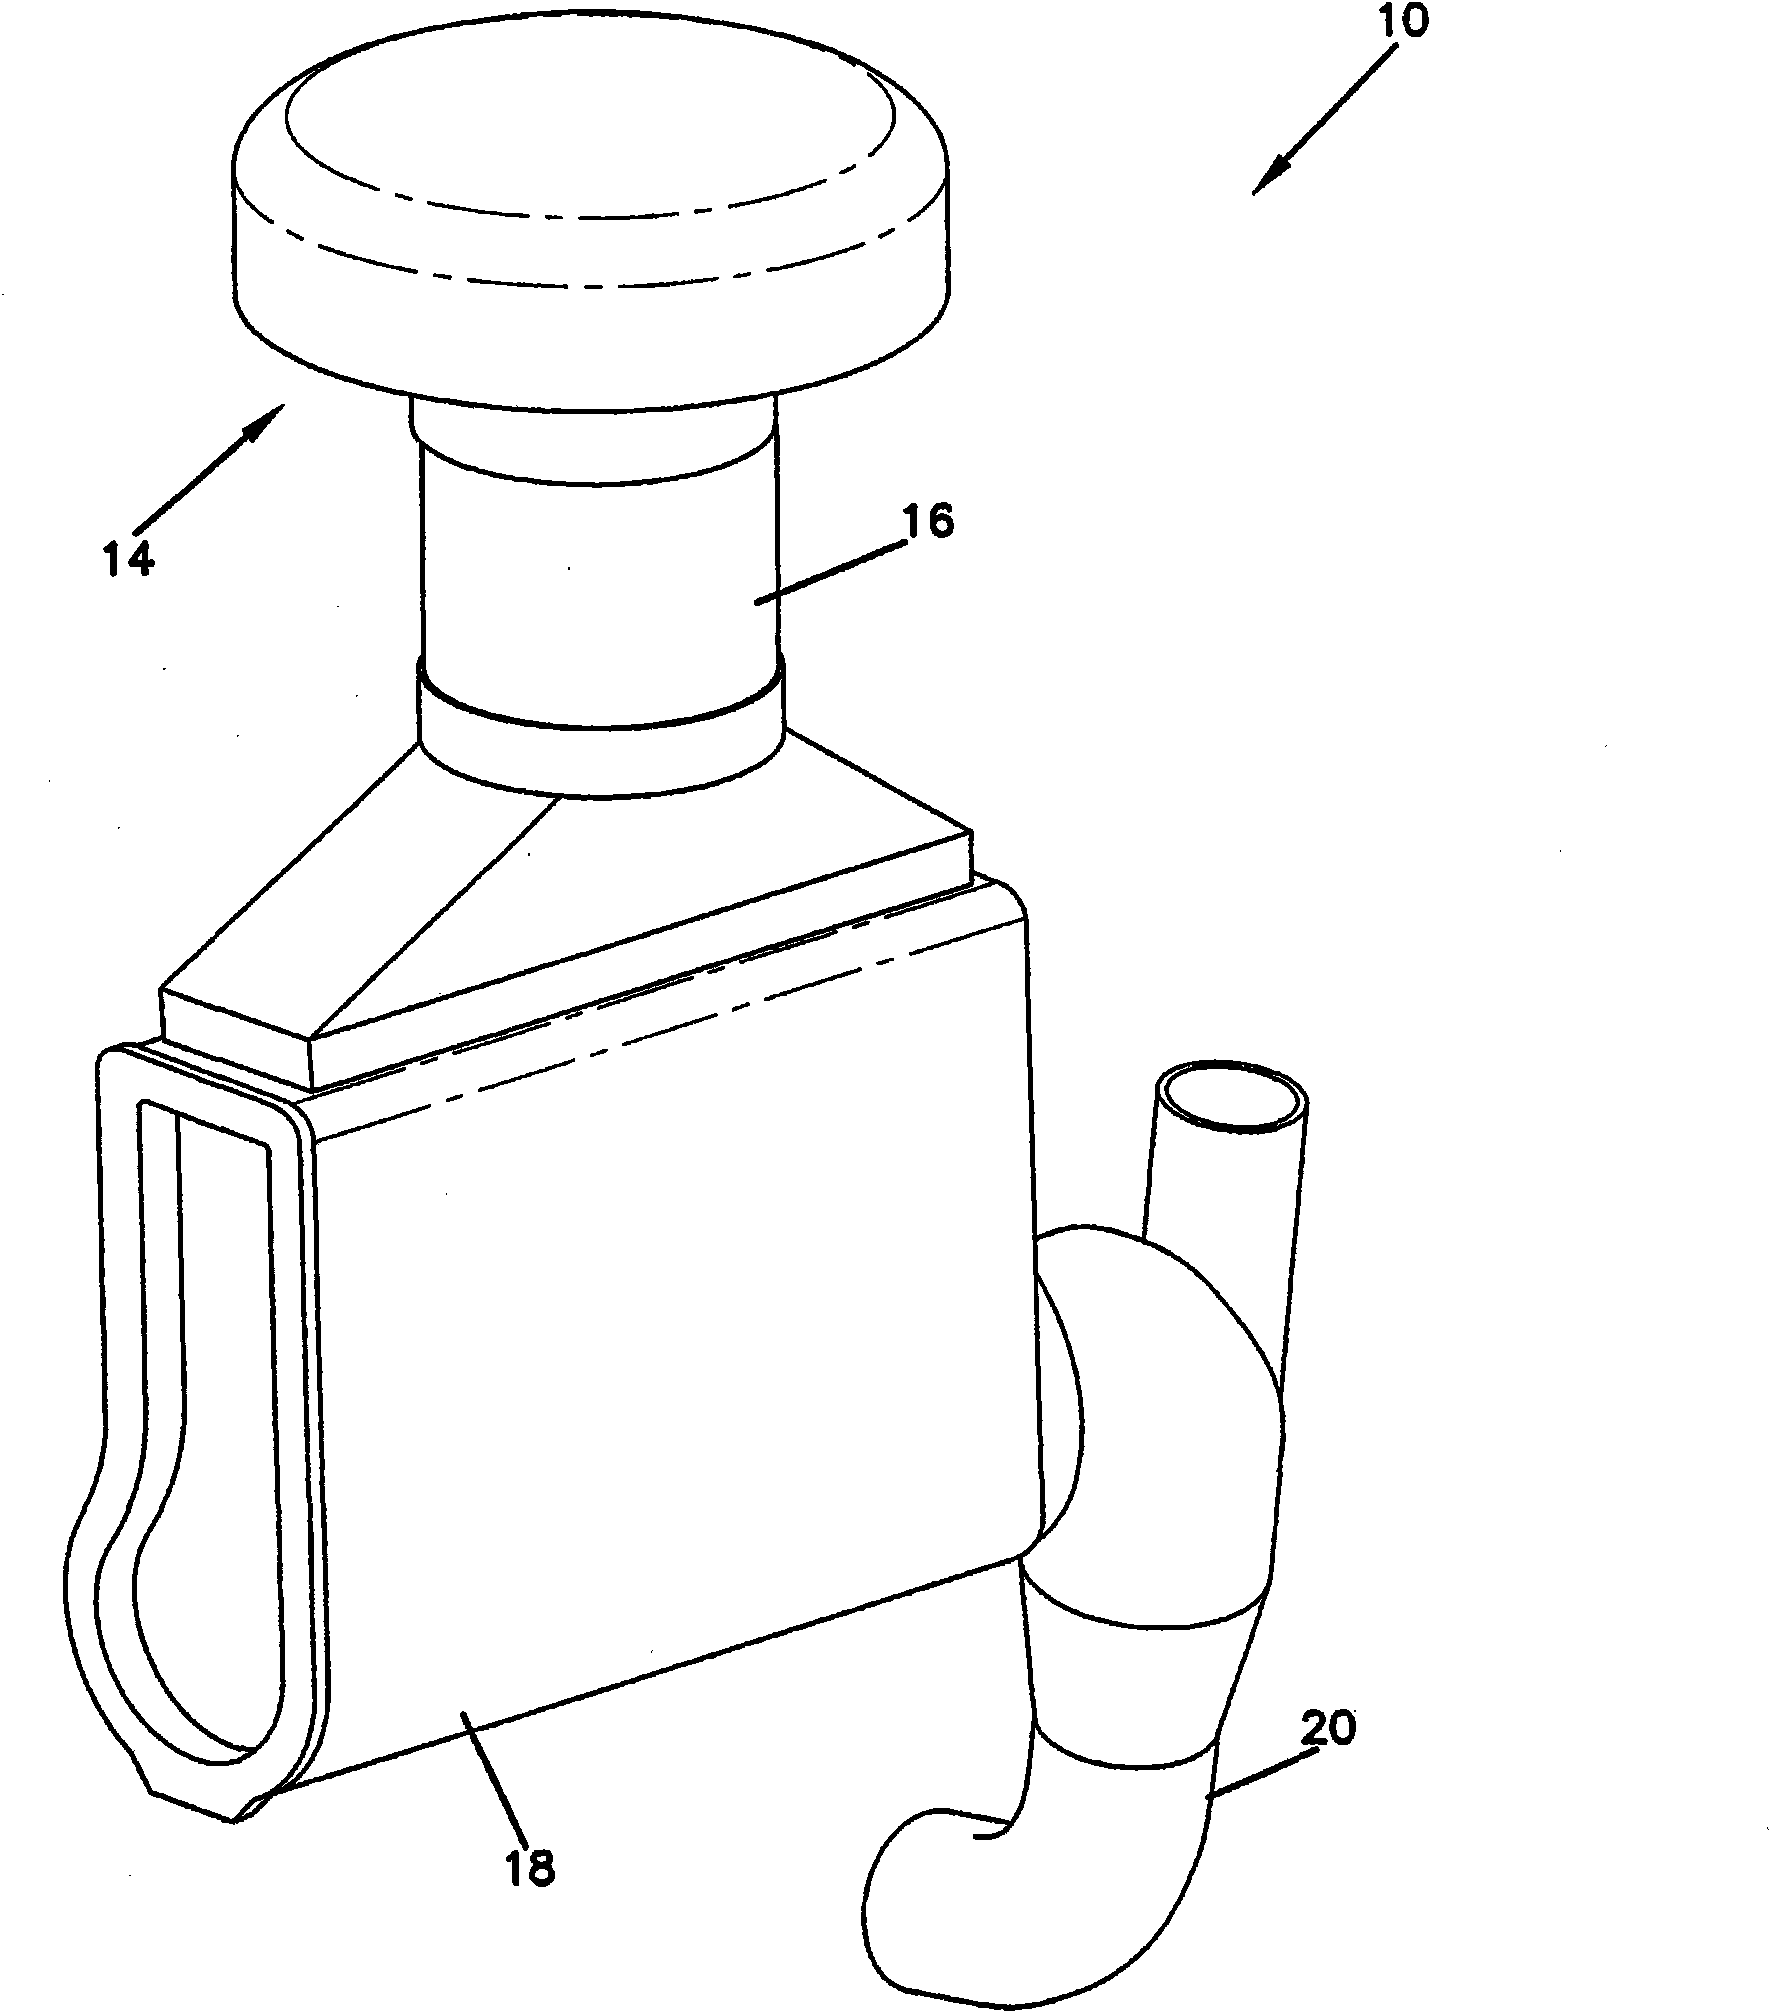 Raincap precleaner, motor vechile having a raincap precleaner, and method for precleaning air